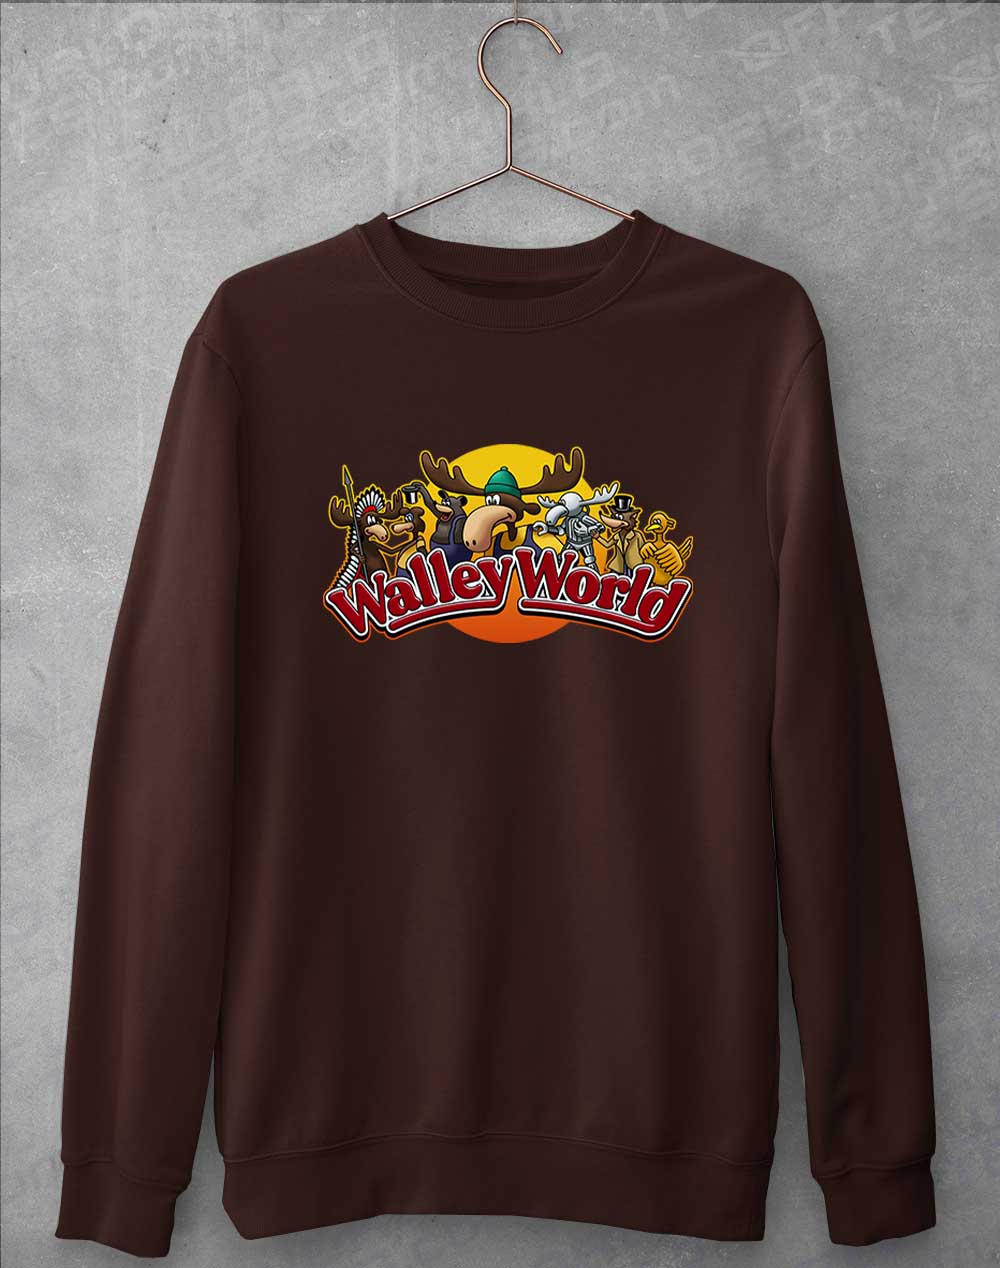 Hot Chocolate - Walley World Sweatshirt